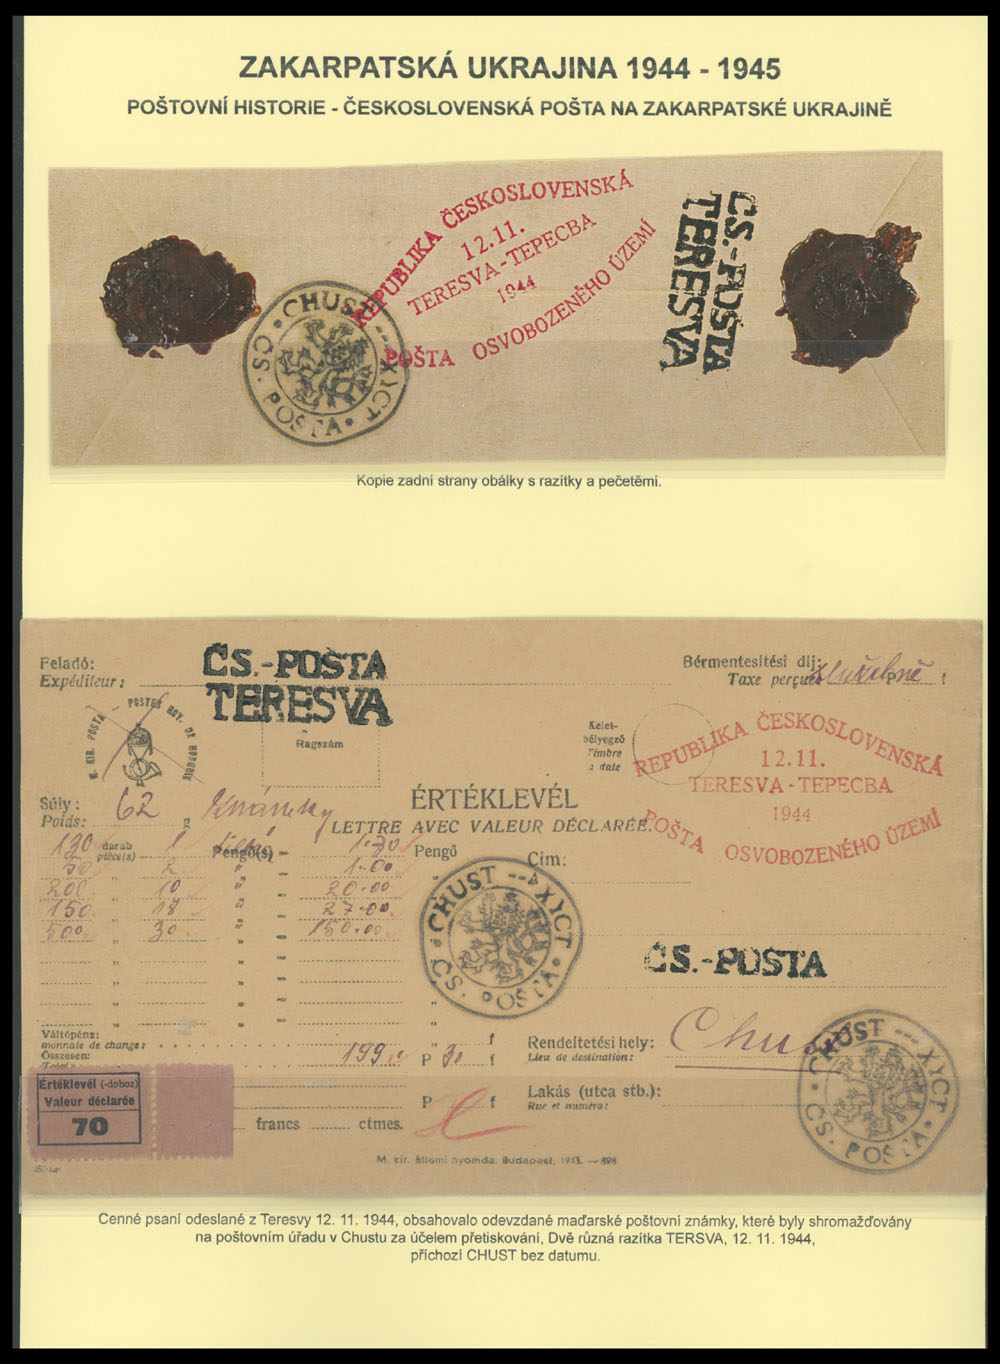 Lot 24 - 3. Chust Postal History items Teresva Postal History Items -  Raritan Stamps Inc. The Jiří Majer Collection of Carpatho - Ukraine 1944-1945, Live Bidding Auction #98